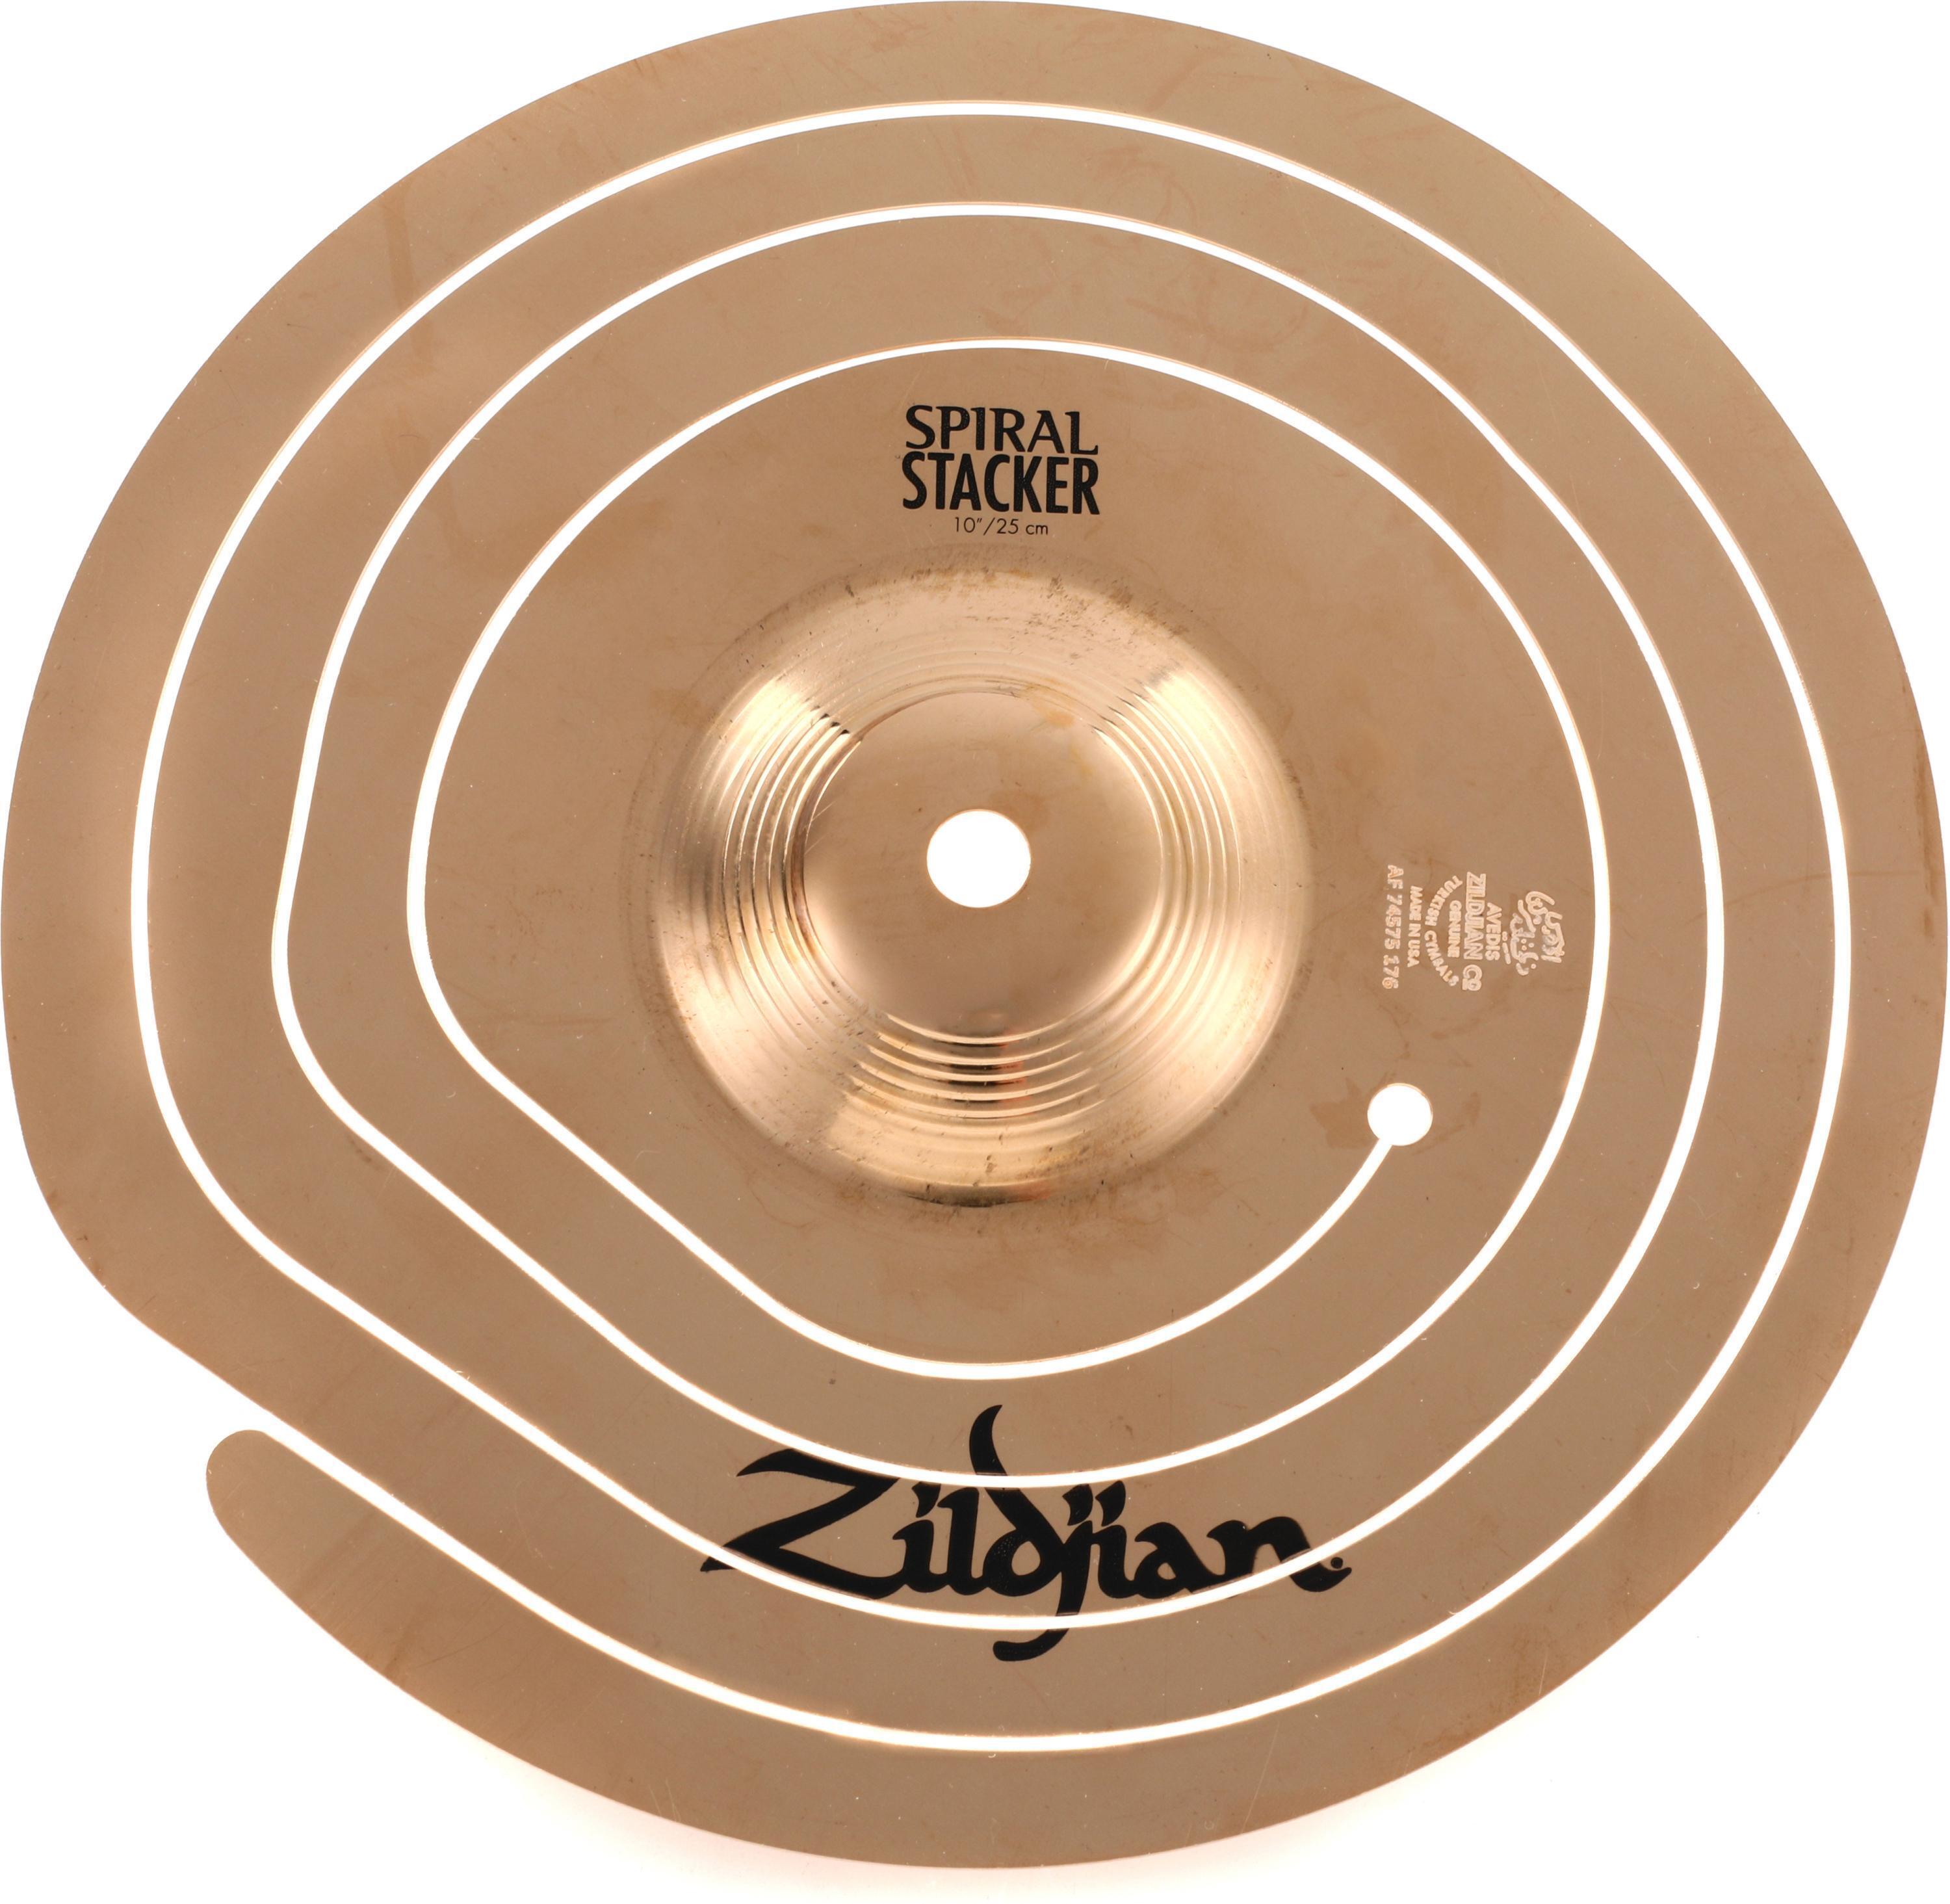 Zildjian 10 inch fx Spiral Stacker Cymbal